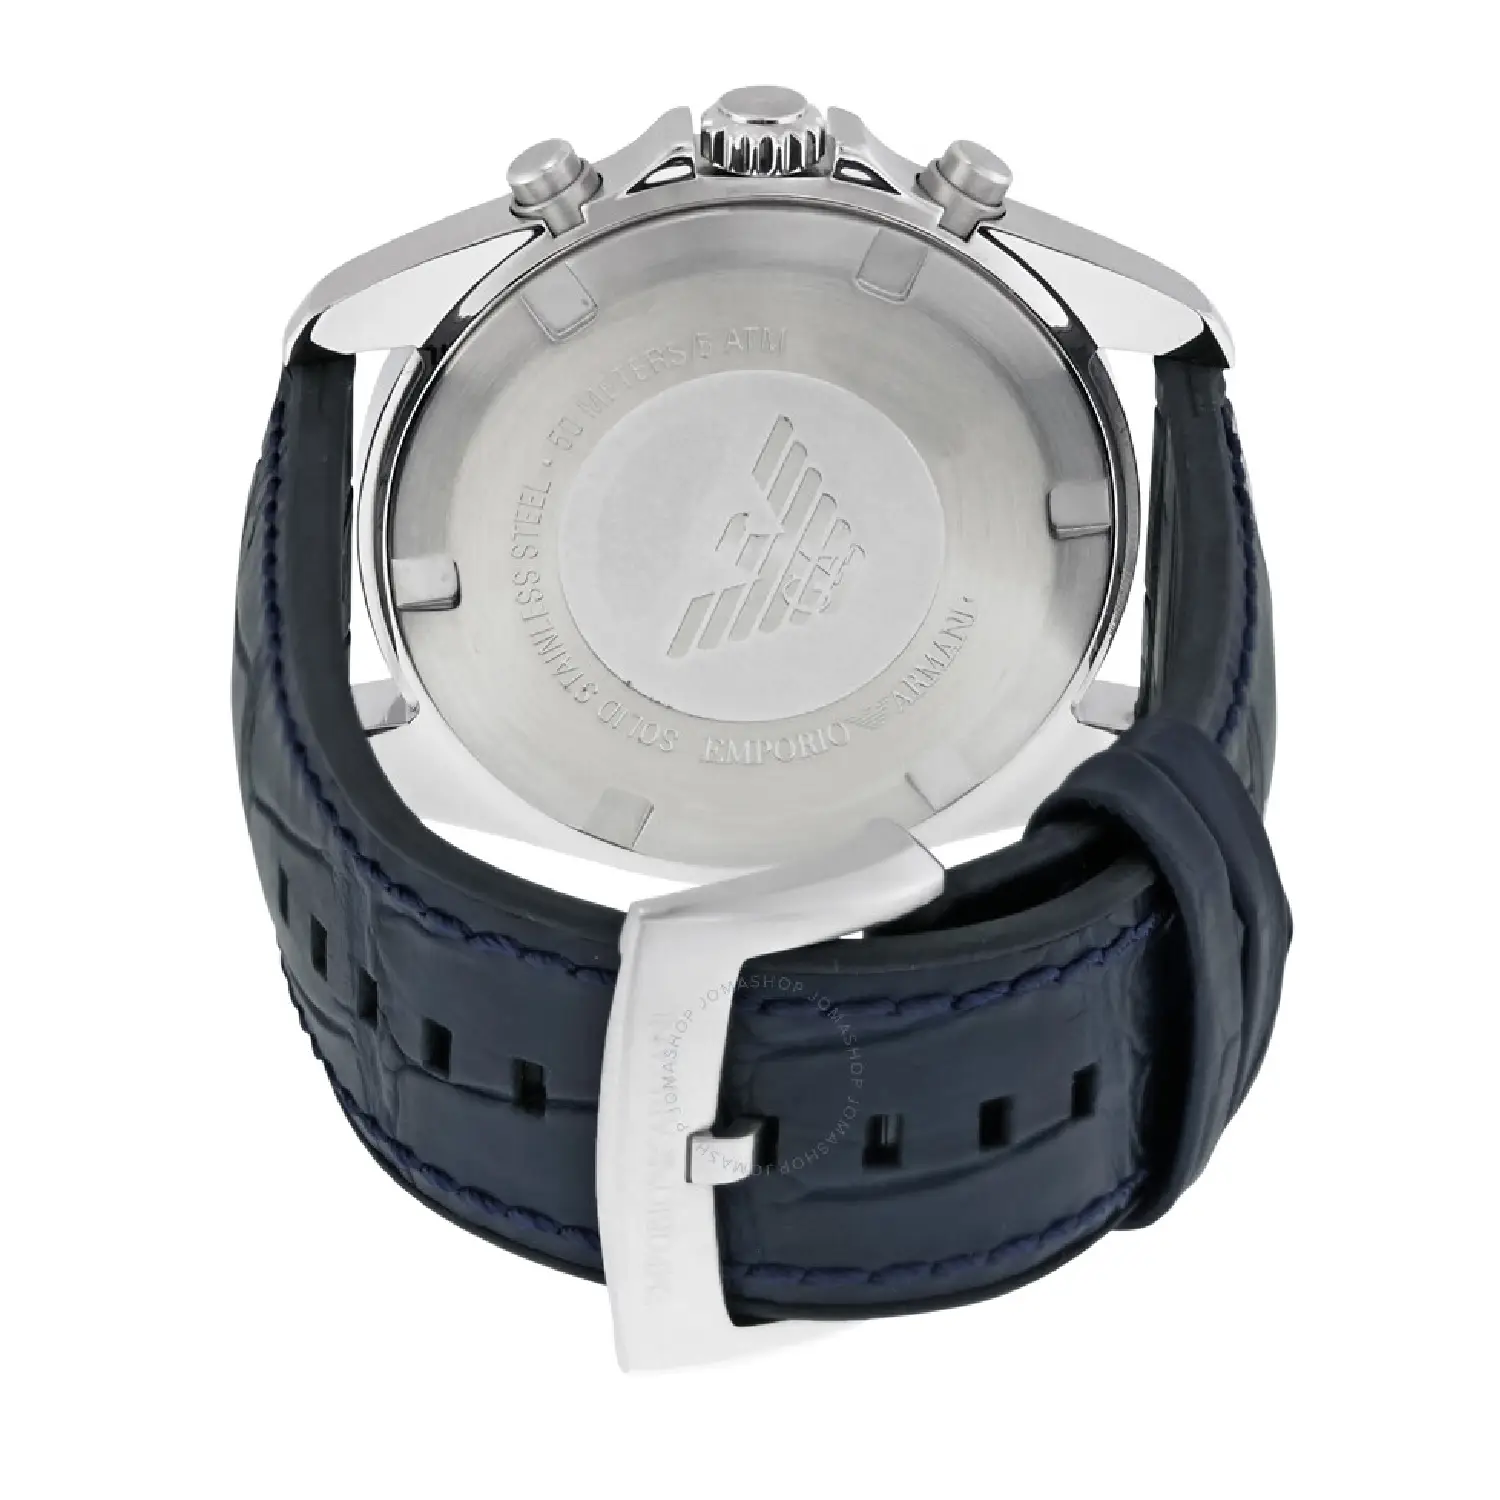 Emporio Armani Mens Classic Wrist Watch Limited Edition